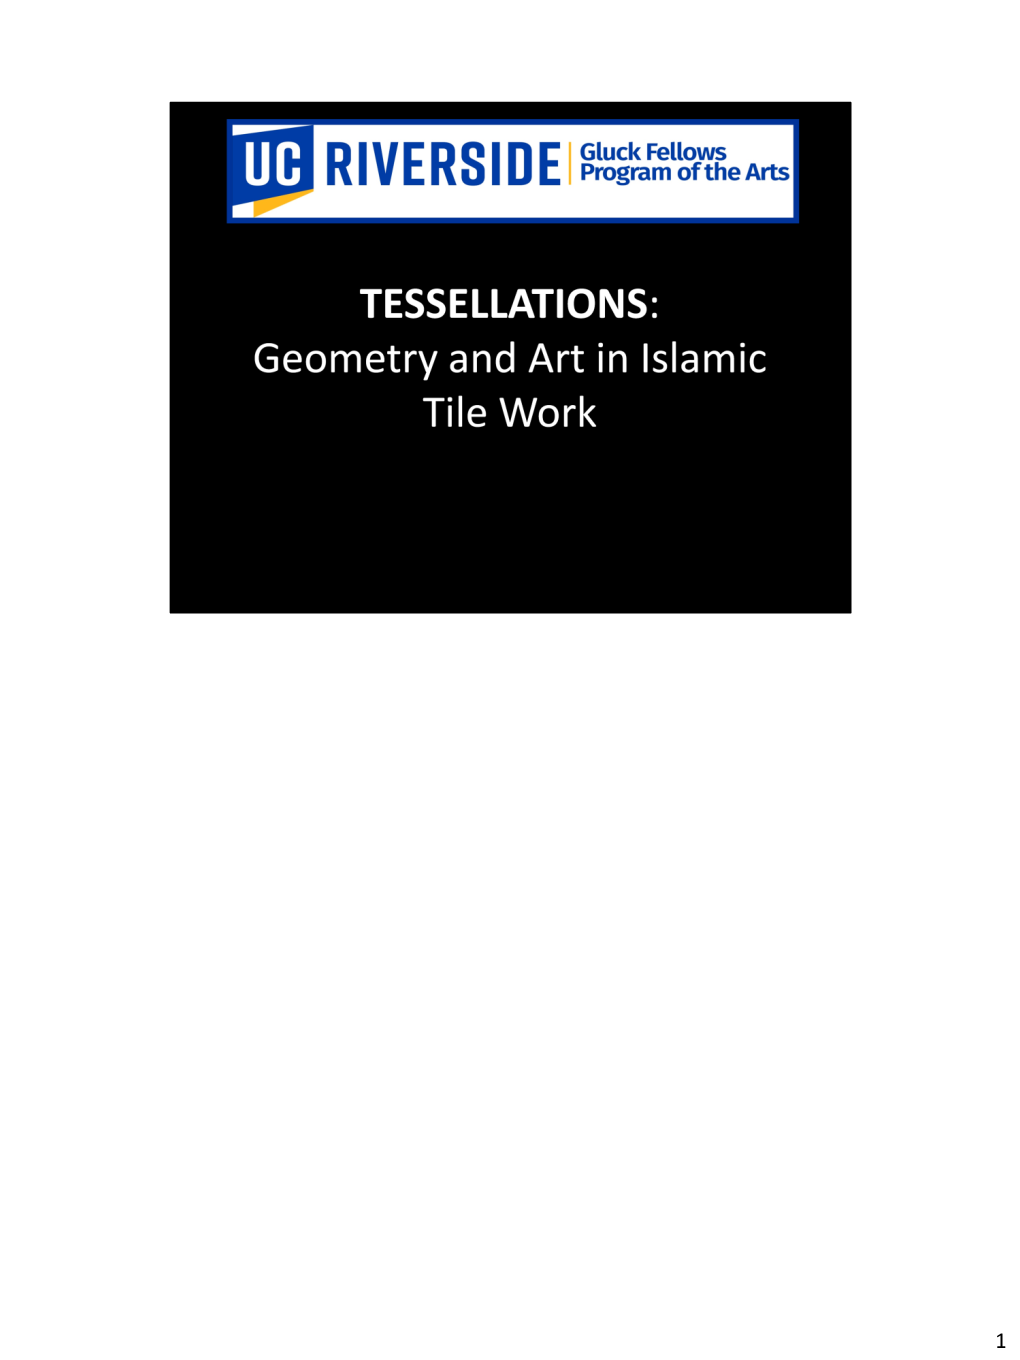 Tessellations: Geometry and Art in Islamic Tile Work